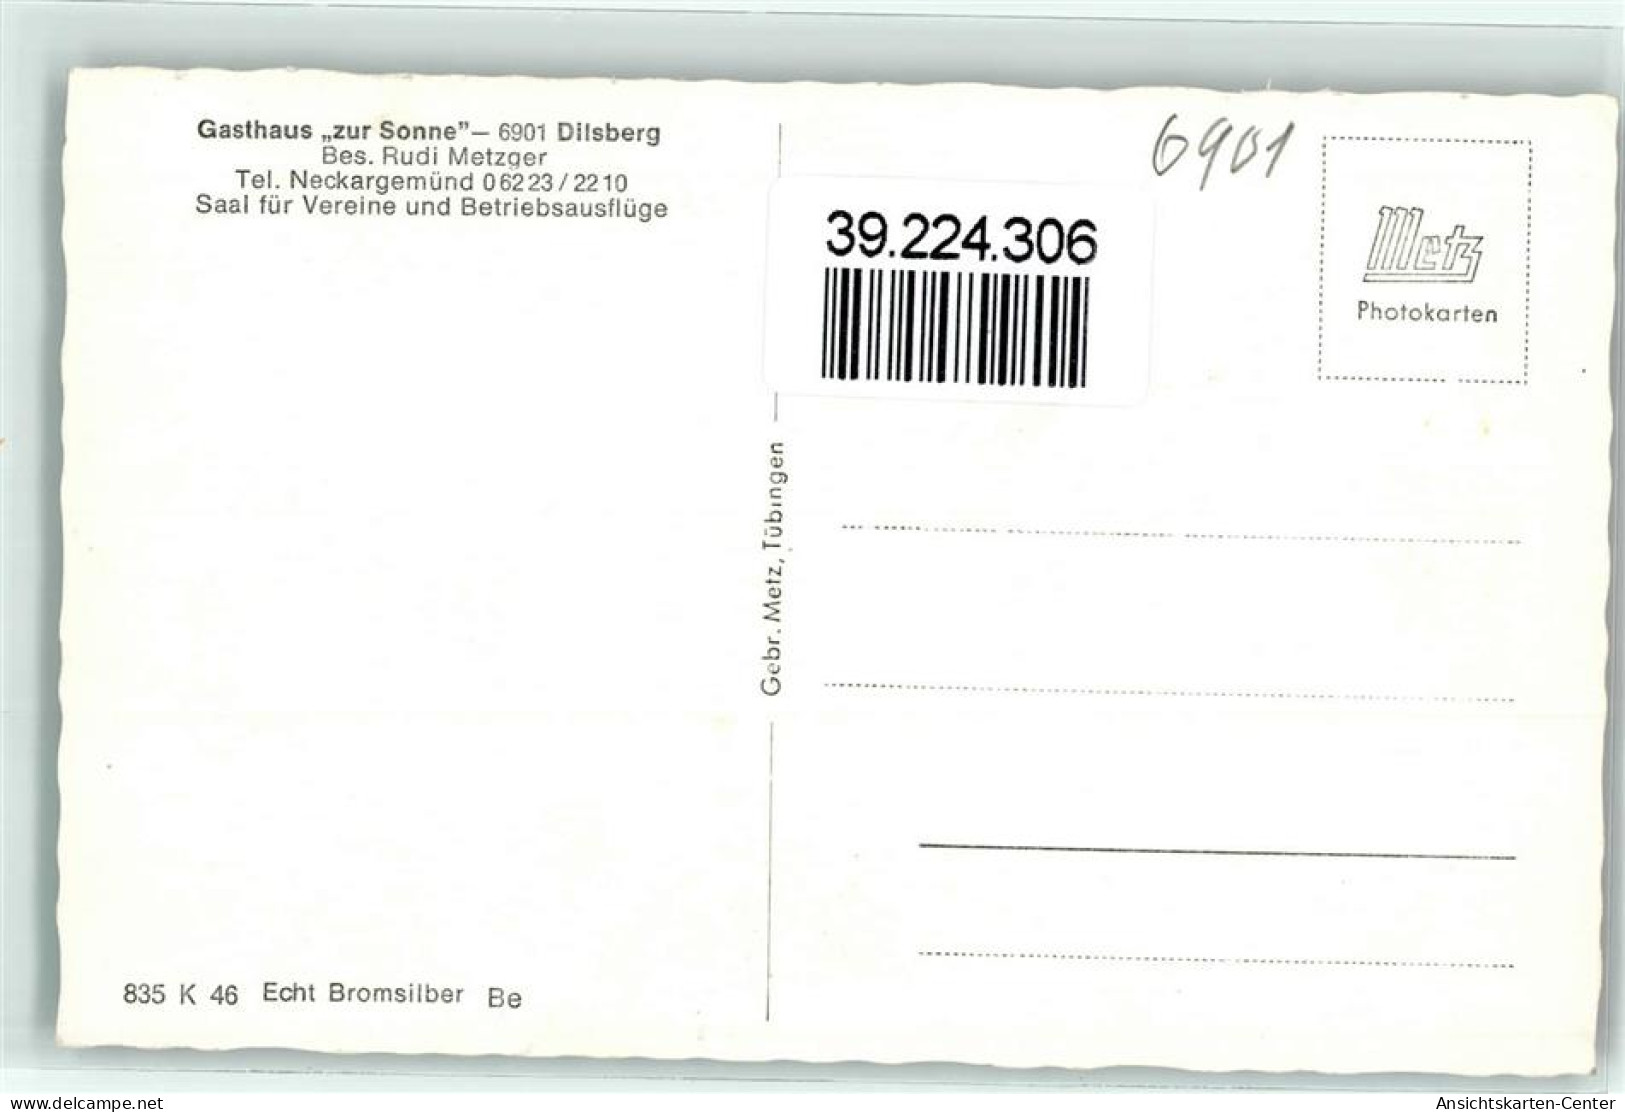 39224306 - Dilsberg - Neckargemuend